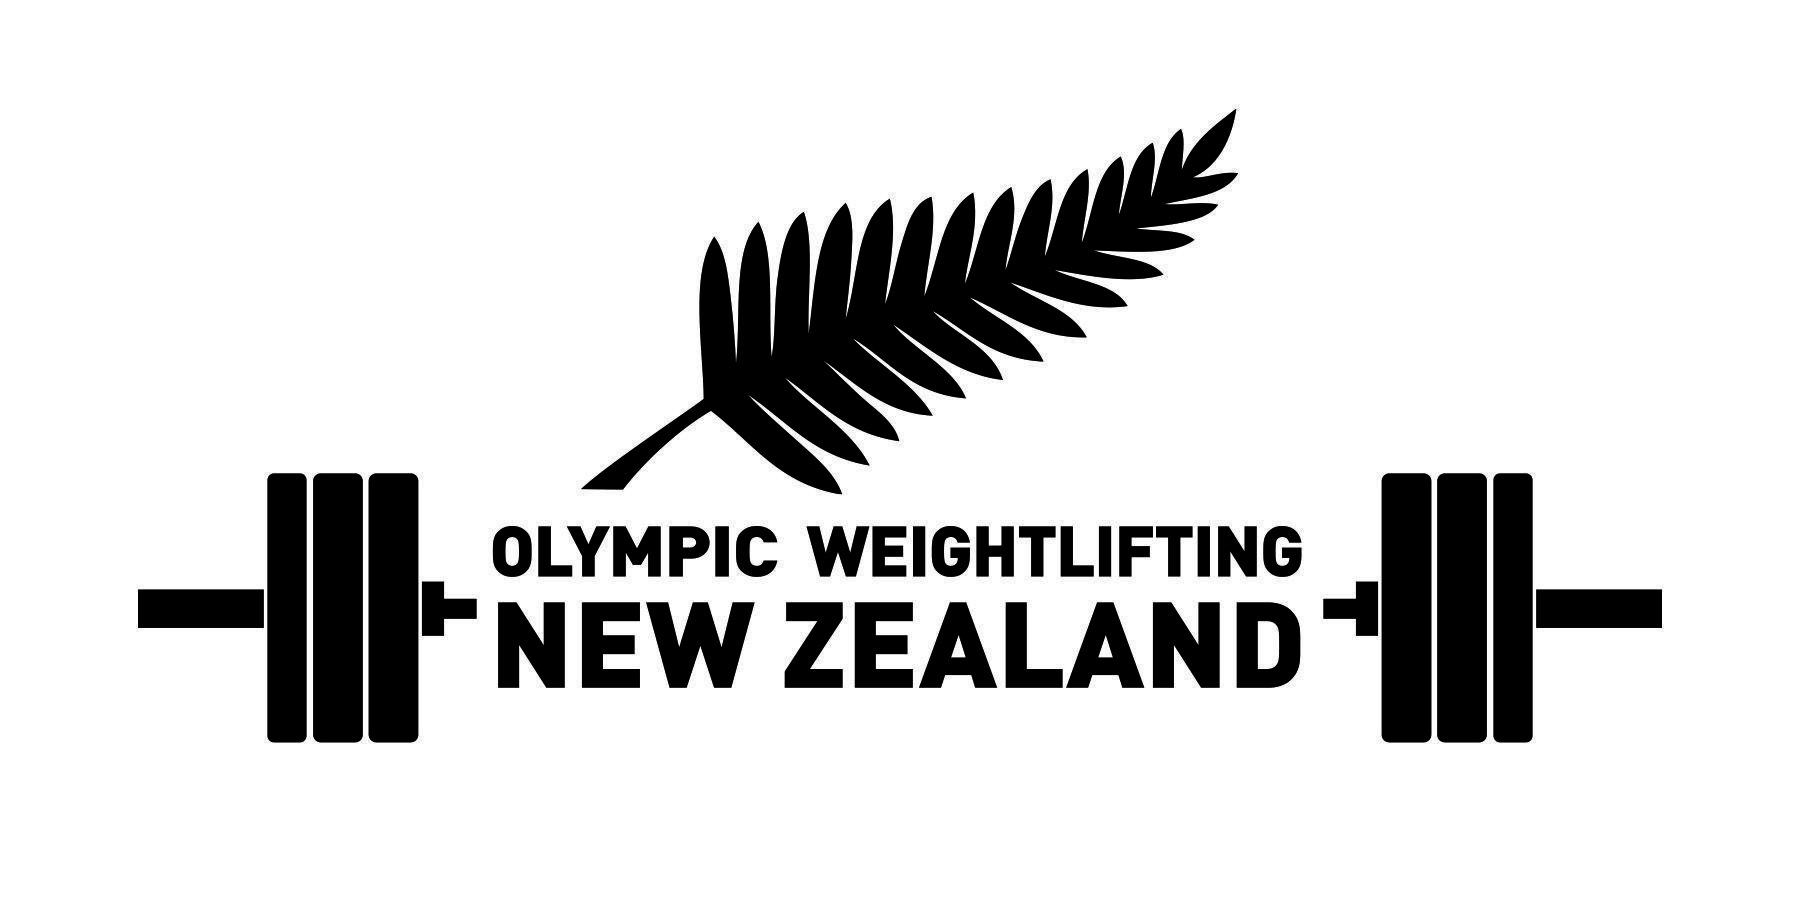 Weightlifting Logo - OWNZ logo download | Olympic Weightlifting New Zealand